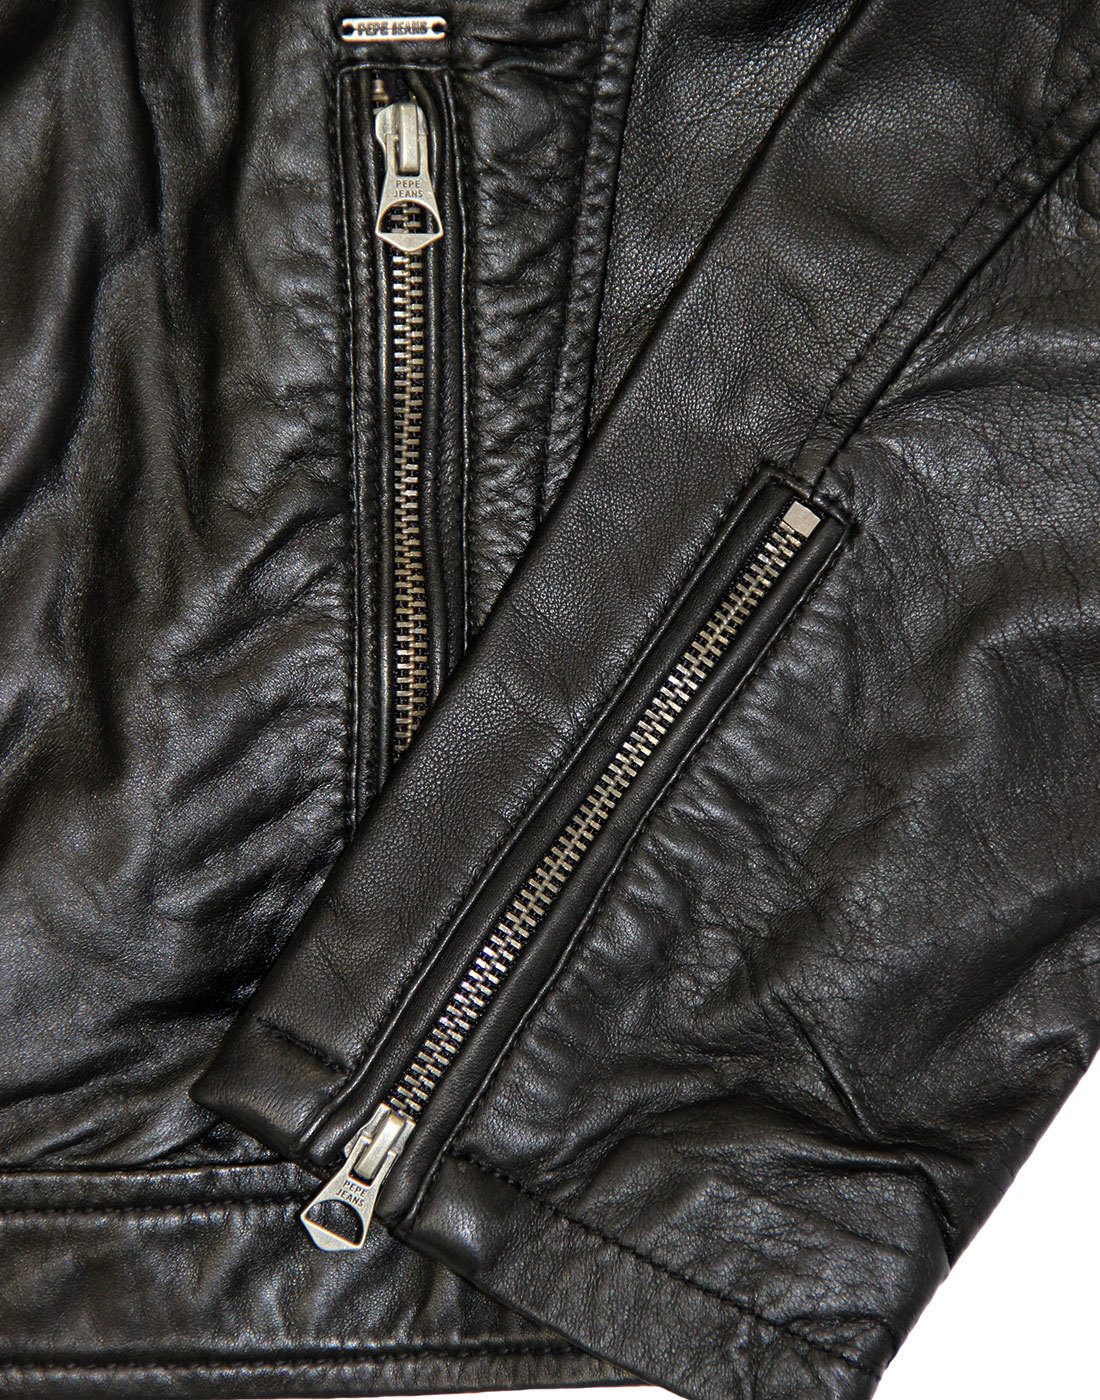 PEPE JEANS Lennon Retro 70s Portobello Leather Biker Jacket